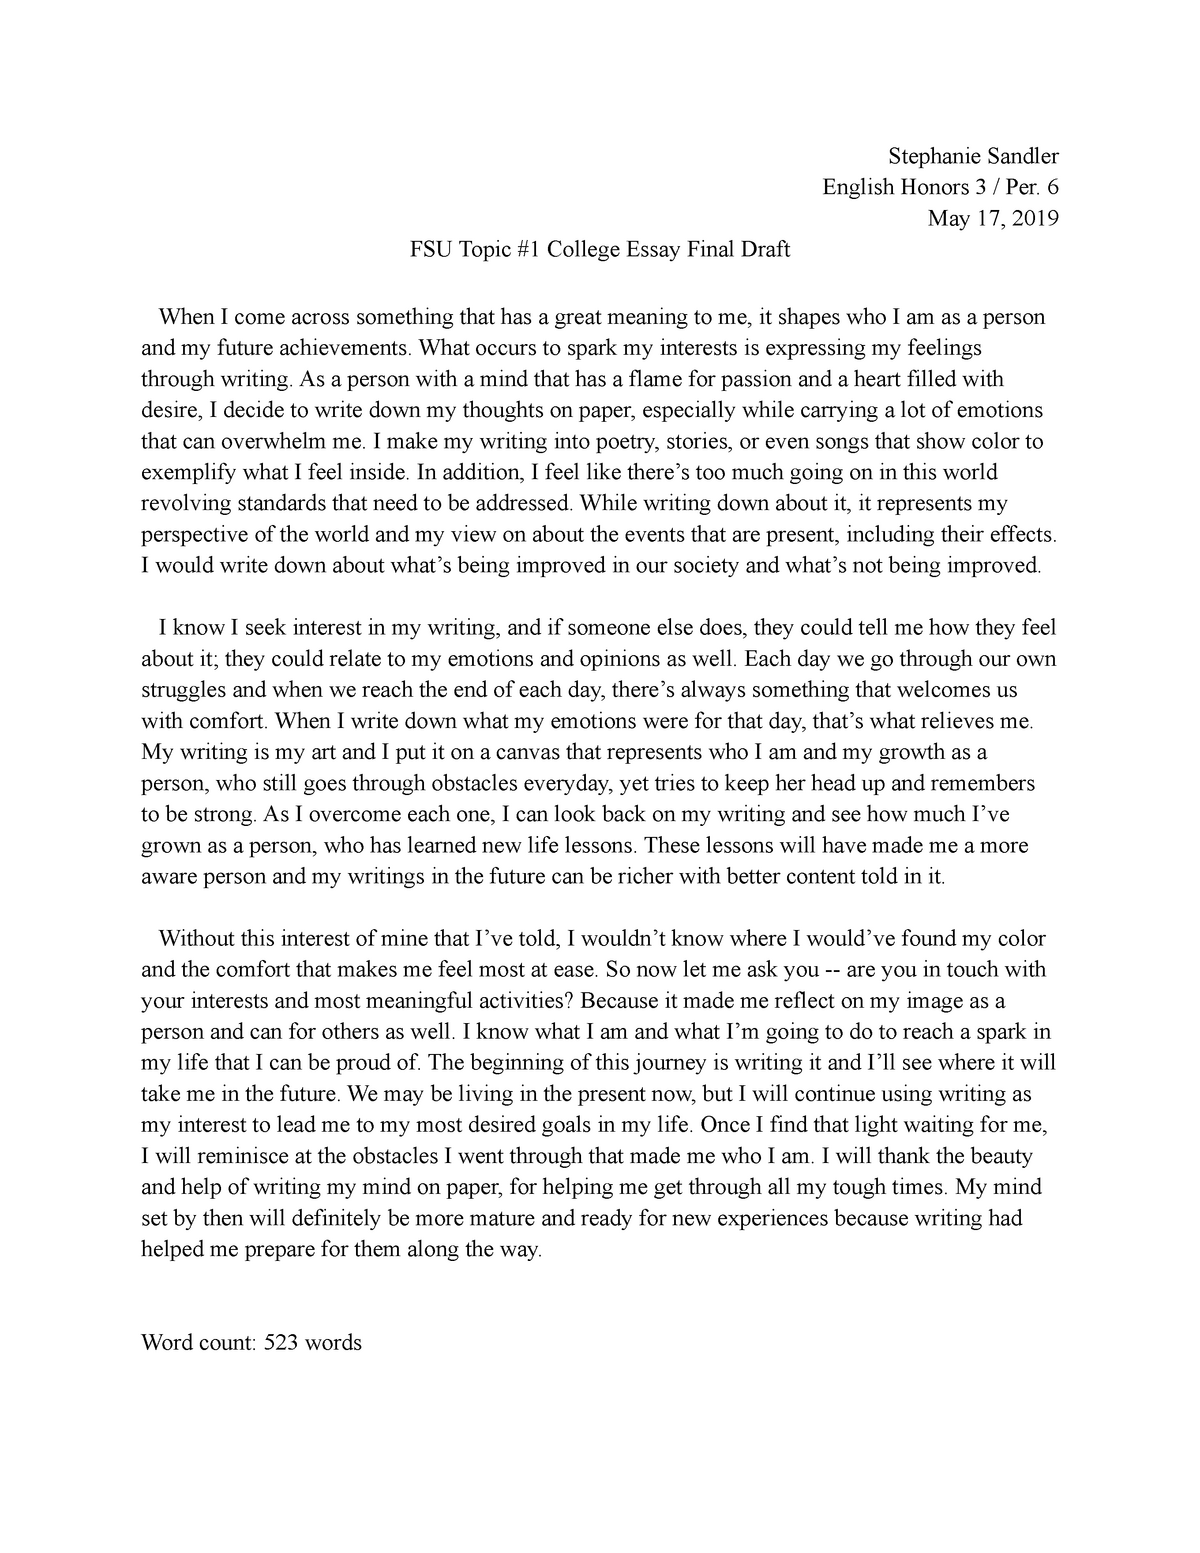 fsu honors college essay examples